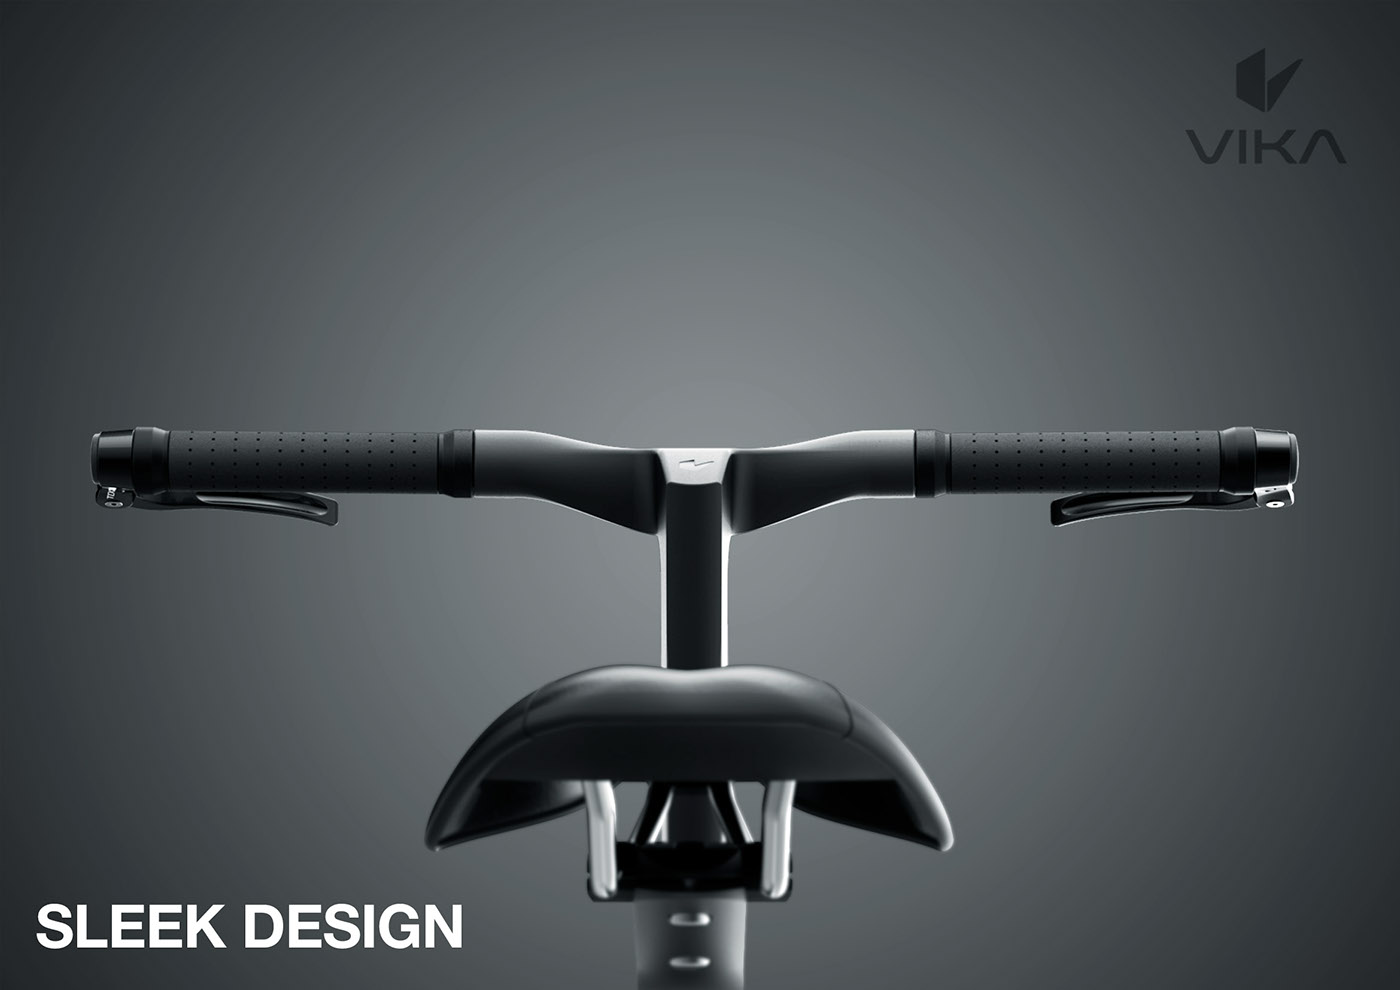 folding bike innovation design Technology Carbon Fiber Bike ultra lightweight commute vika vikabike